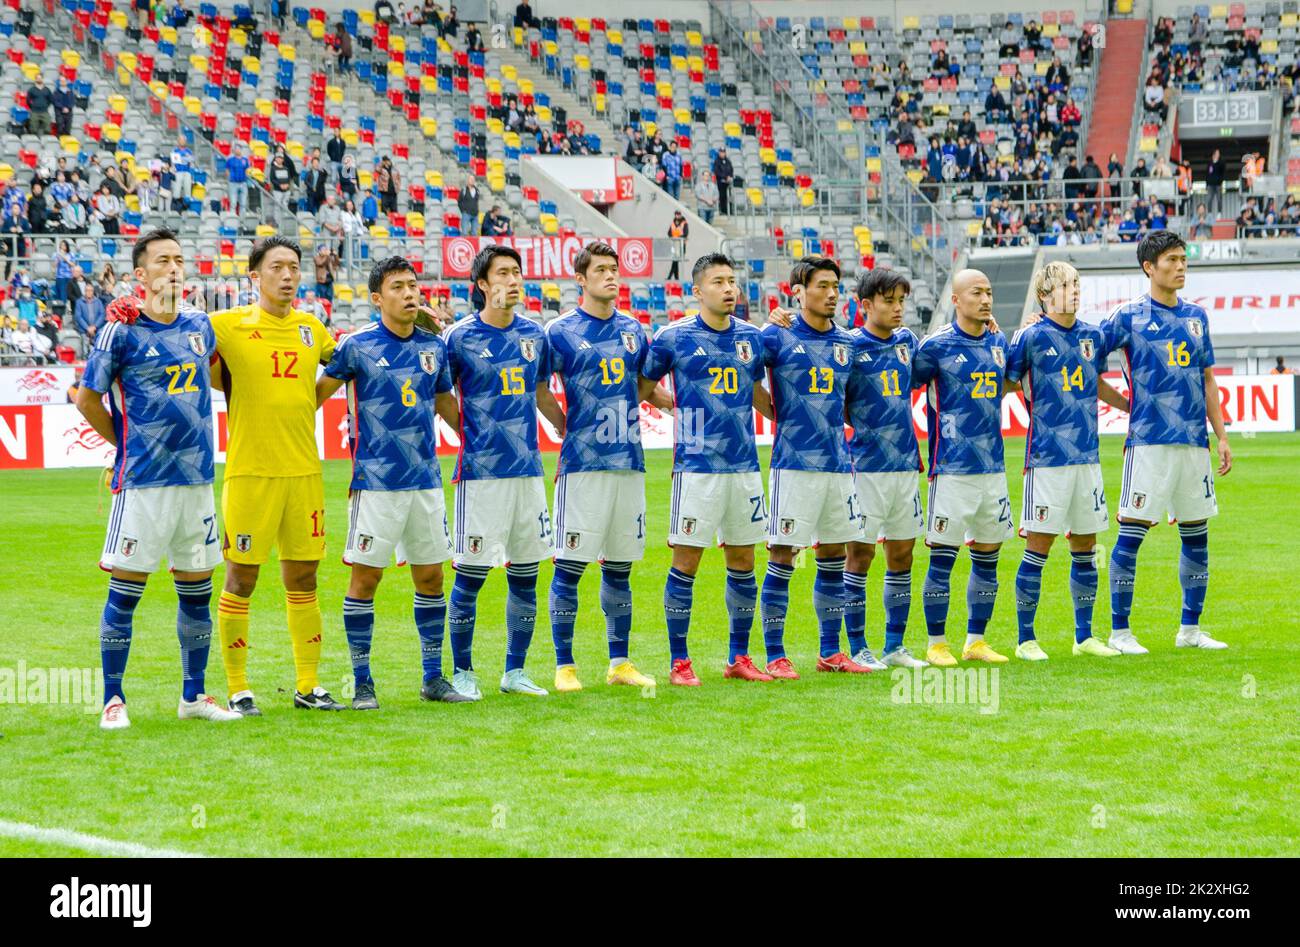 Dusseldorf, North Rhine Westphalia, Germany. 23rd Sep, 2022. The Japanese national team, including (from left to right) MAYA YOSHIDA (22), SHUICHI GONDA (12), WATARU ENDO (6), DAICHI KAMADA (15), HIROKI SAKAI (19), YUTA NAKAYAMA (20), HIDEMASA MORITA (13), TAKEFUSA KUBO (11), DAIZEN MAEDA (25), jUNYA iTO (14) and tAKEHIRO TOMIYASU (16) sing the national anthem before the 2022 Kirin Challenge Cup against the United States in the Merkur Spiel Arena in Duuseldorf, Germany. (Credit Image: © Kai Dambach/ZUMA Press Wire) Credit: ZUMA Press, Inc./Alamy Live News Stock Photo